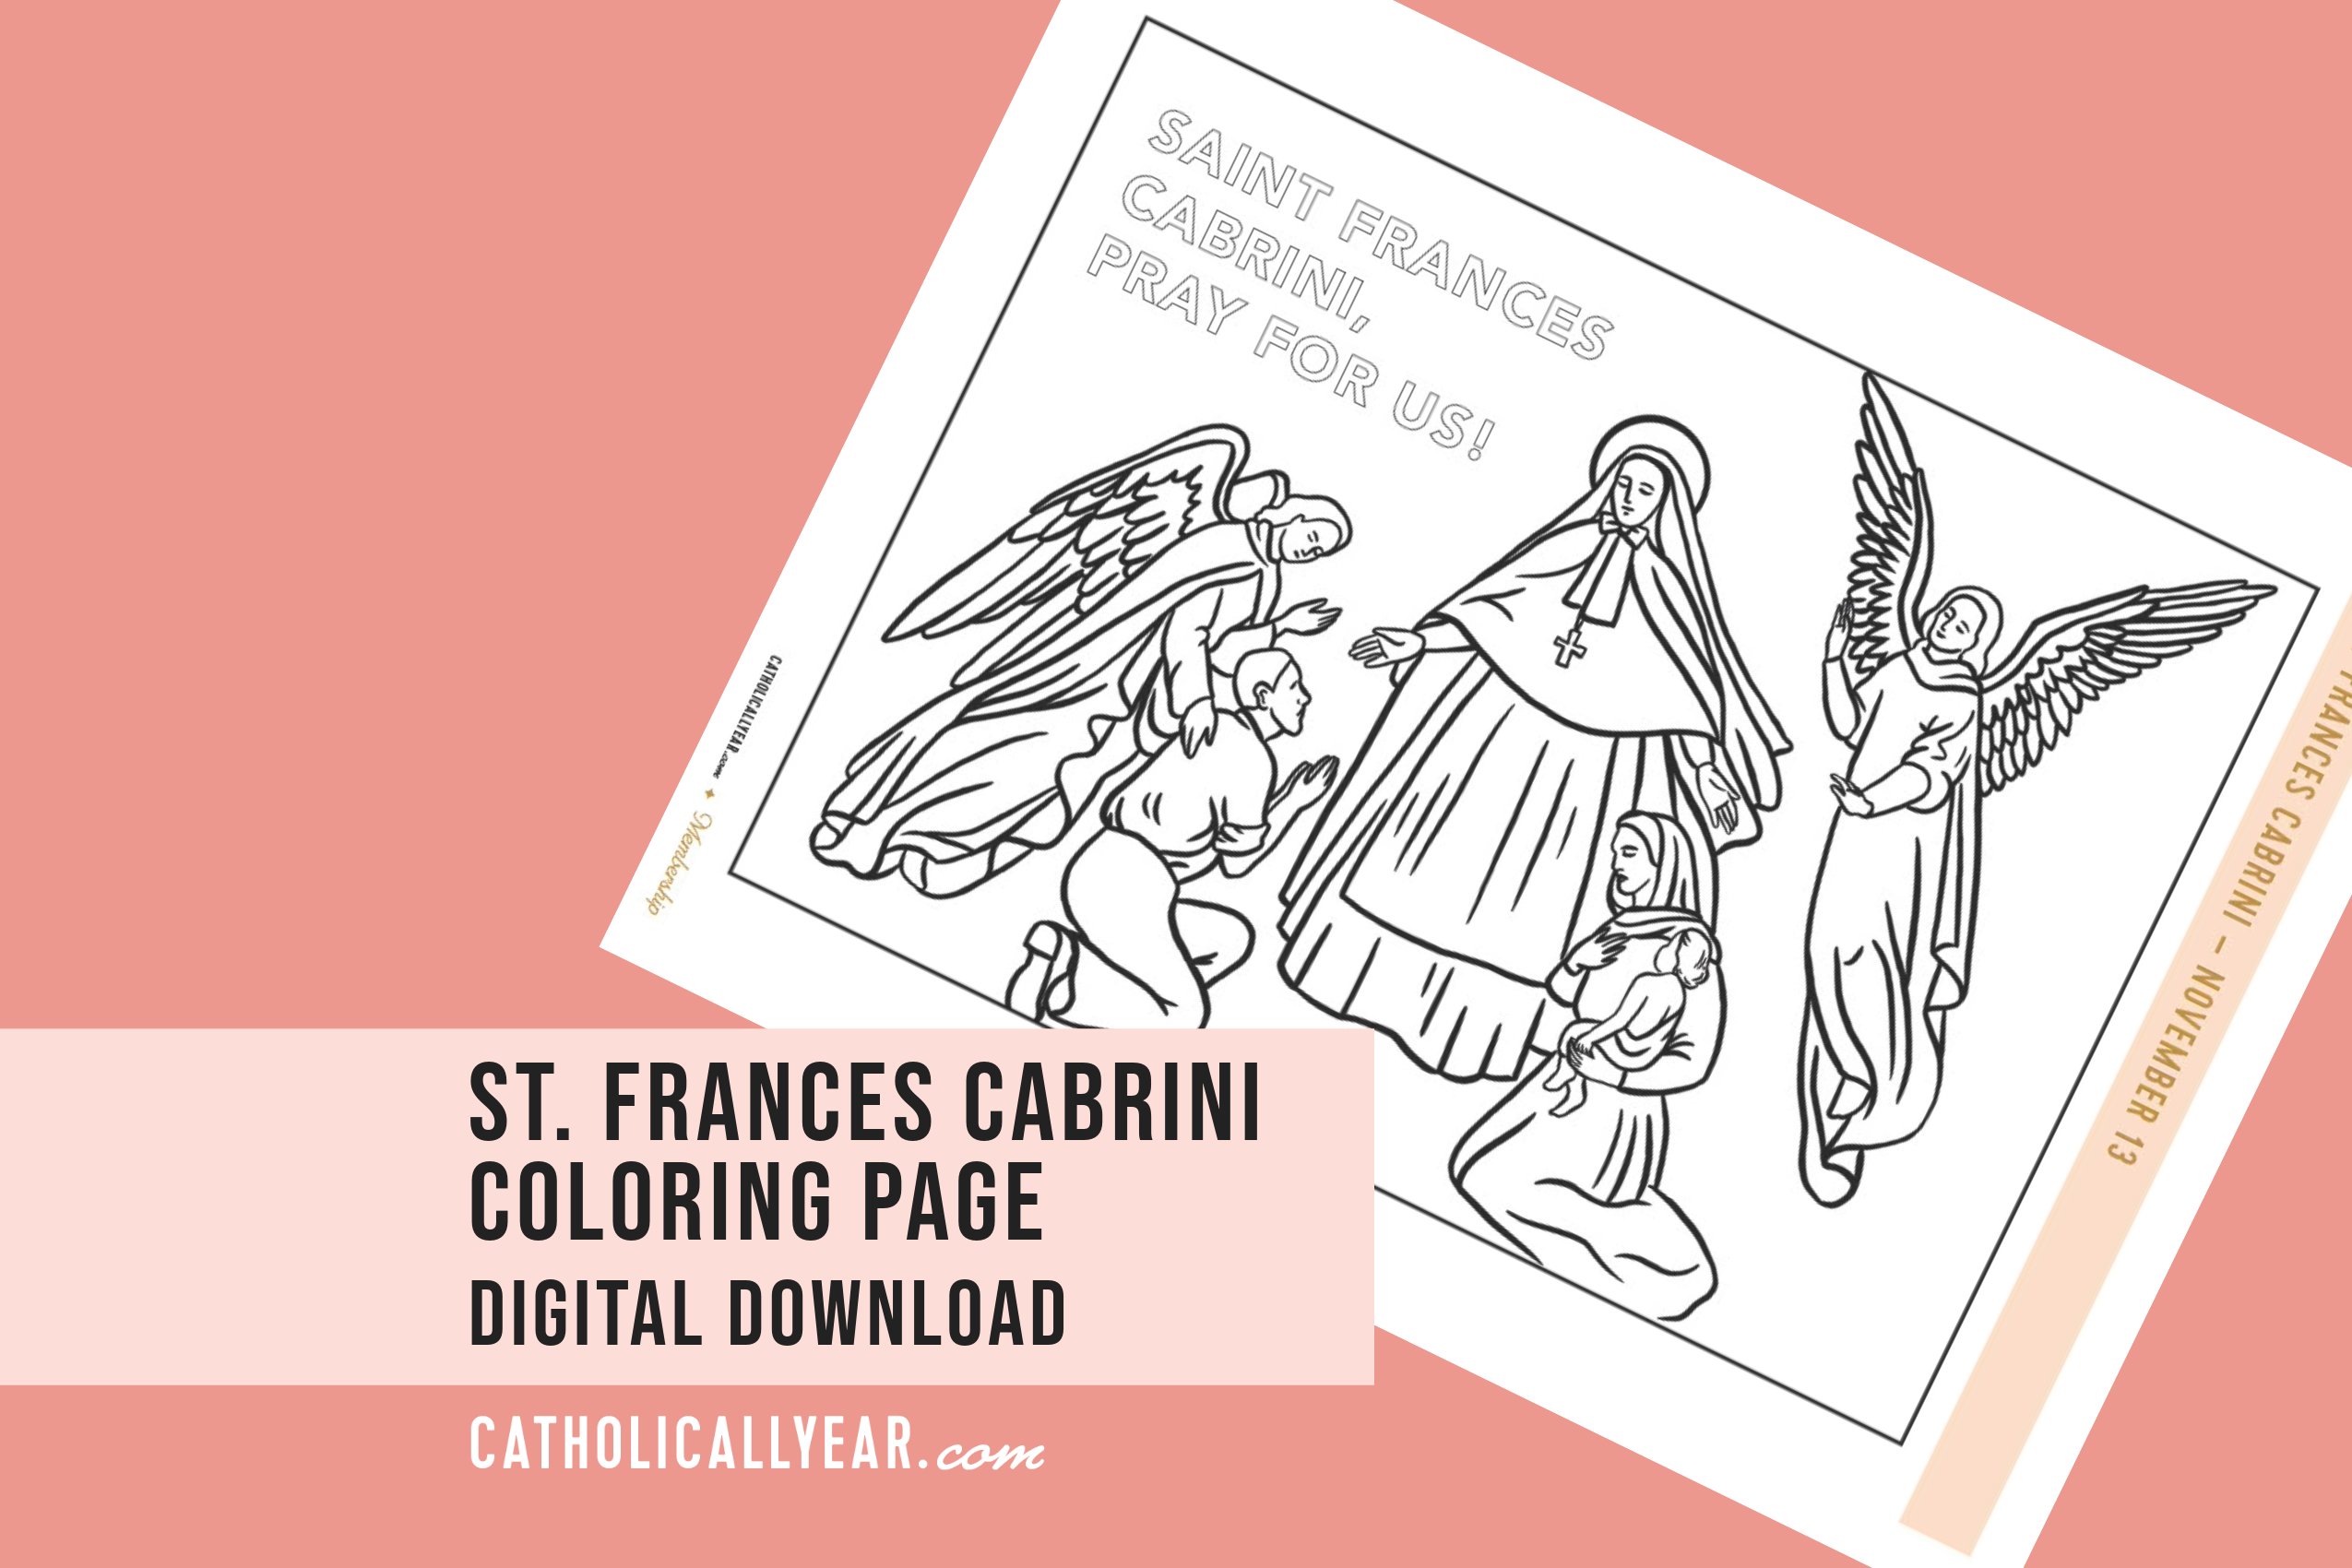 St. Frances Cabrini Coloring Page {Digital Download}